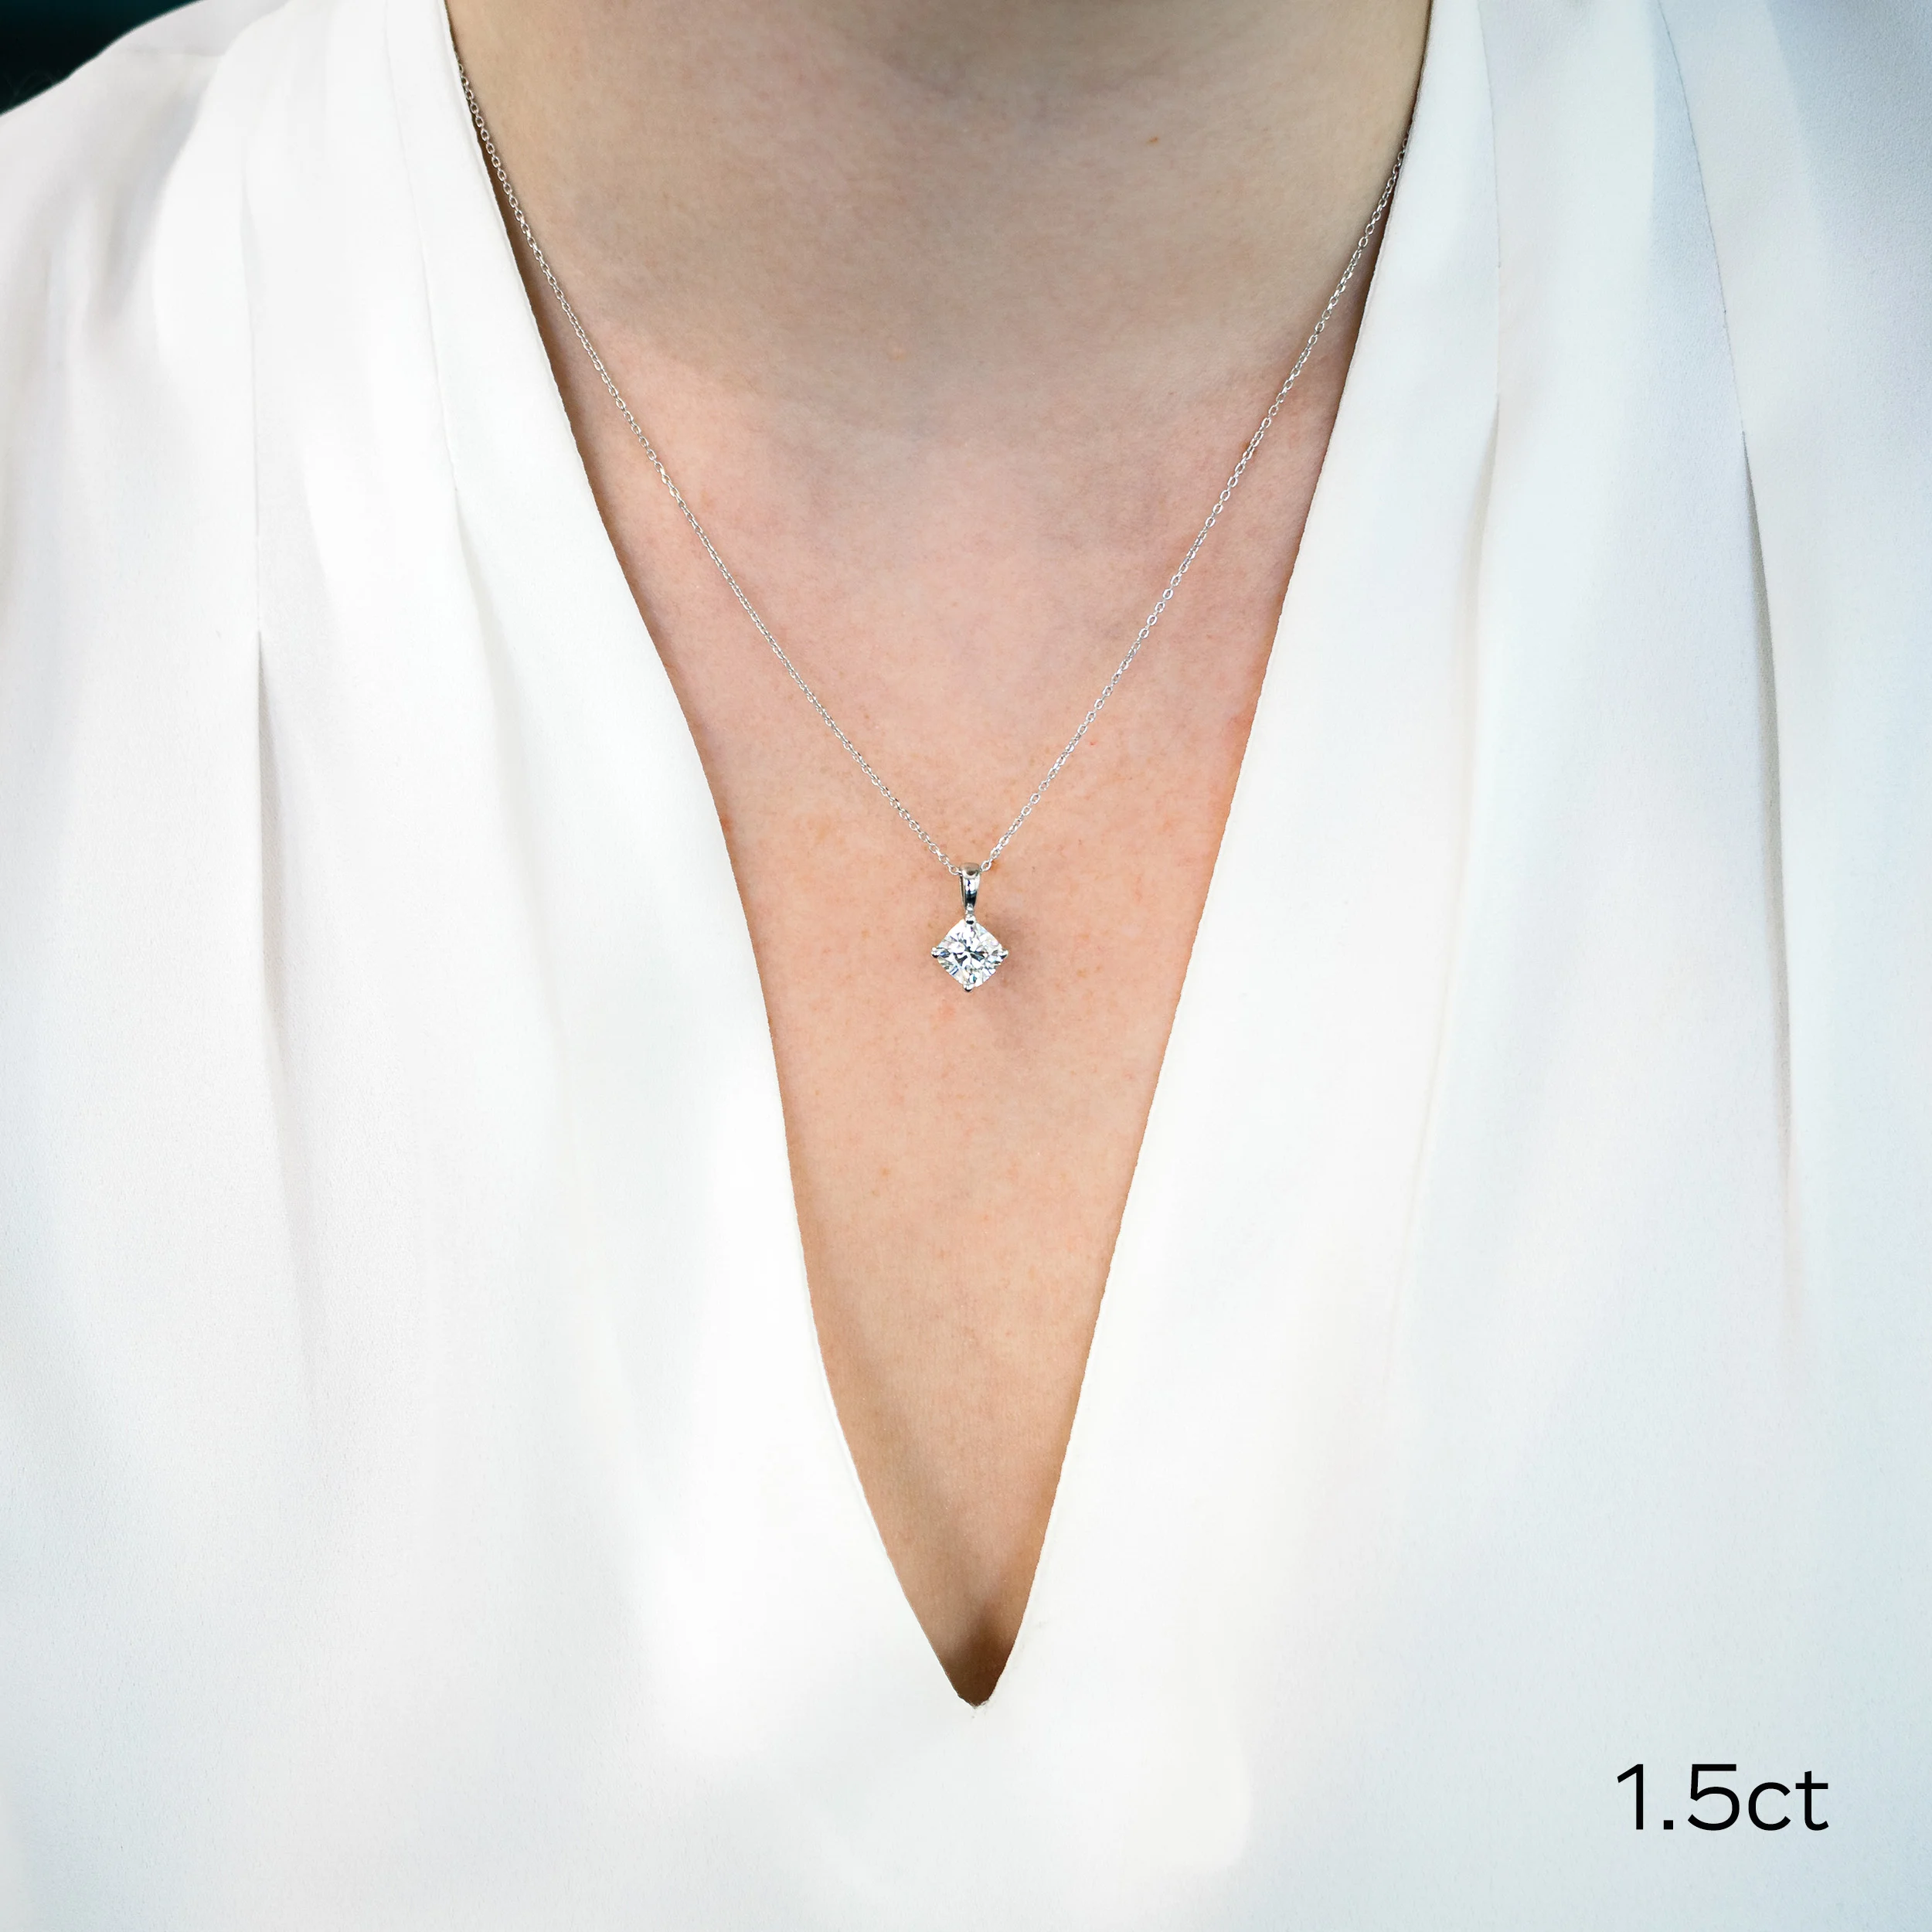 1.5 Carat Lab Created Diamonds set in 14k White Gold 1.5ctw Cushion Cut Diamond Pendant in 14k White Gold (Main View)